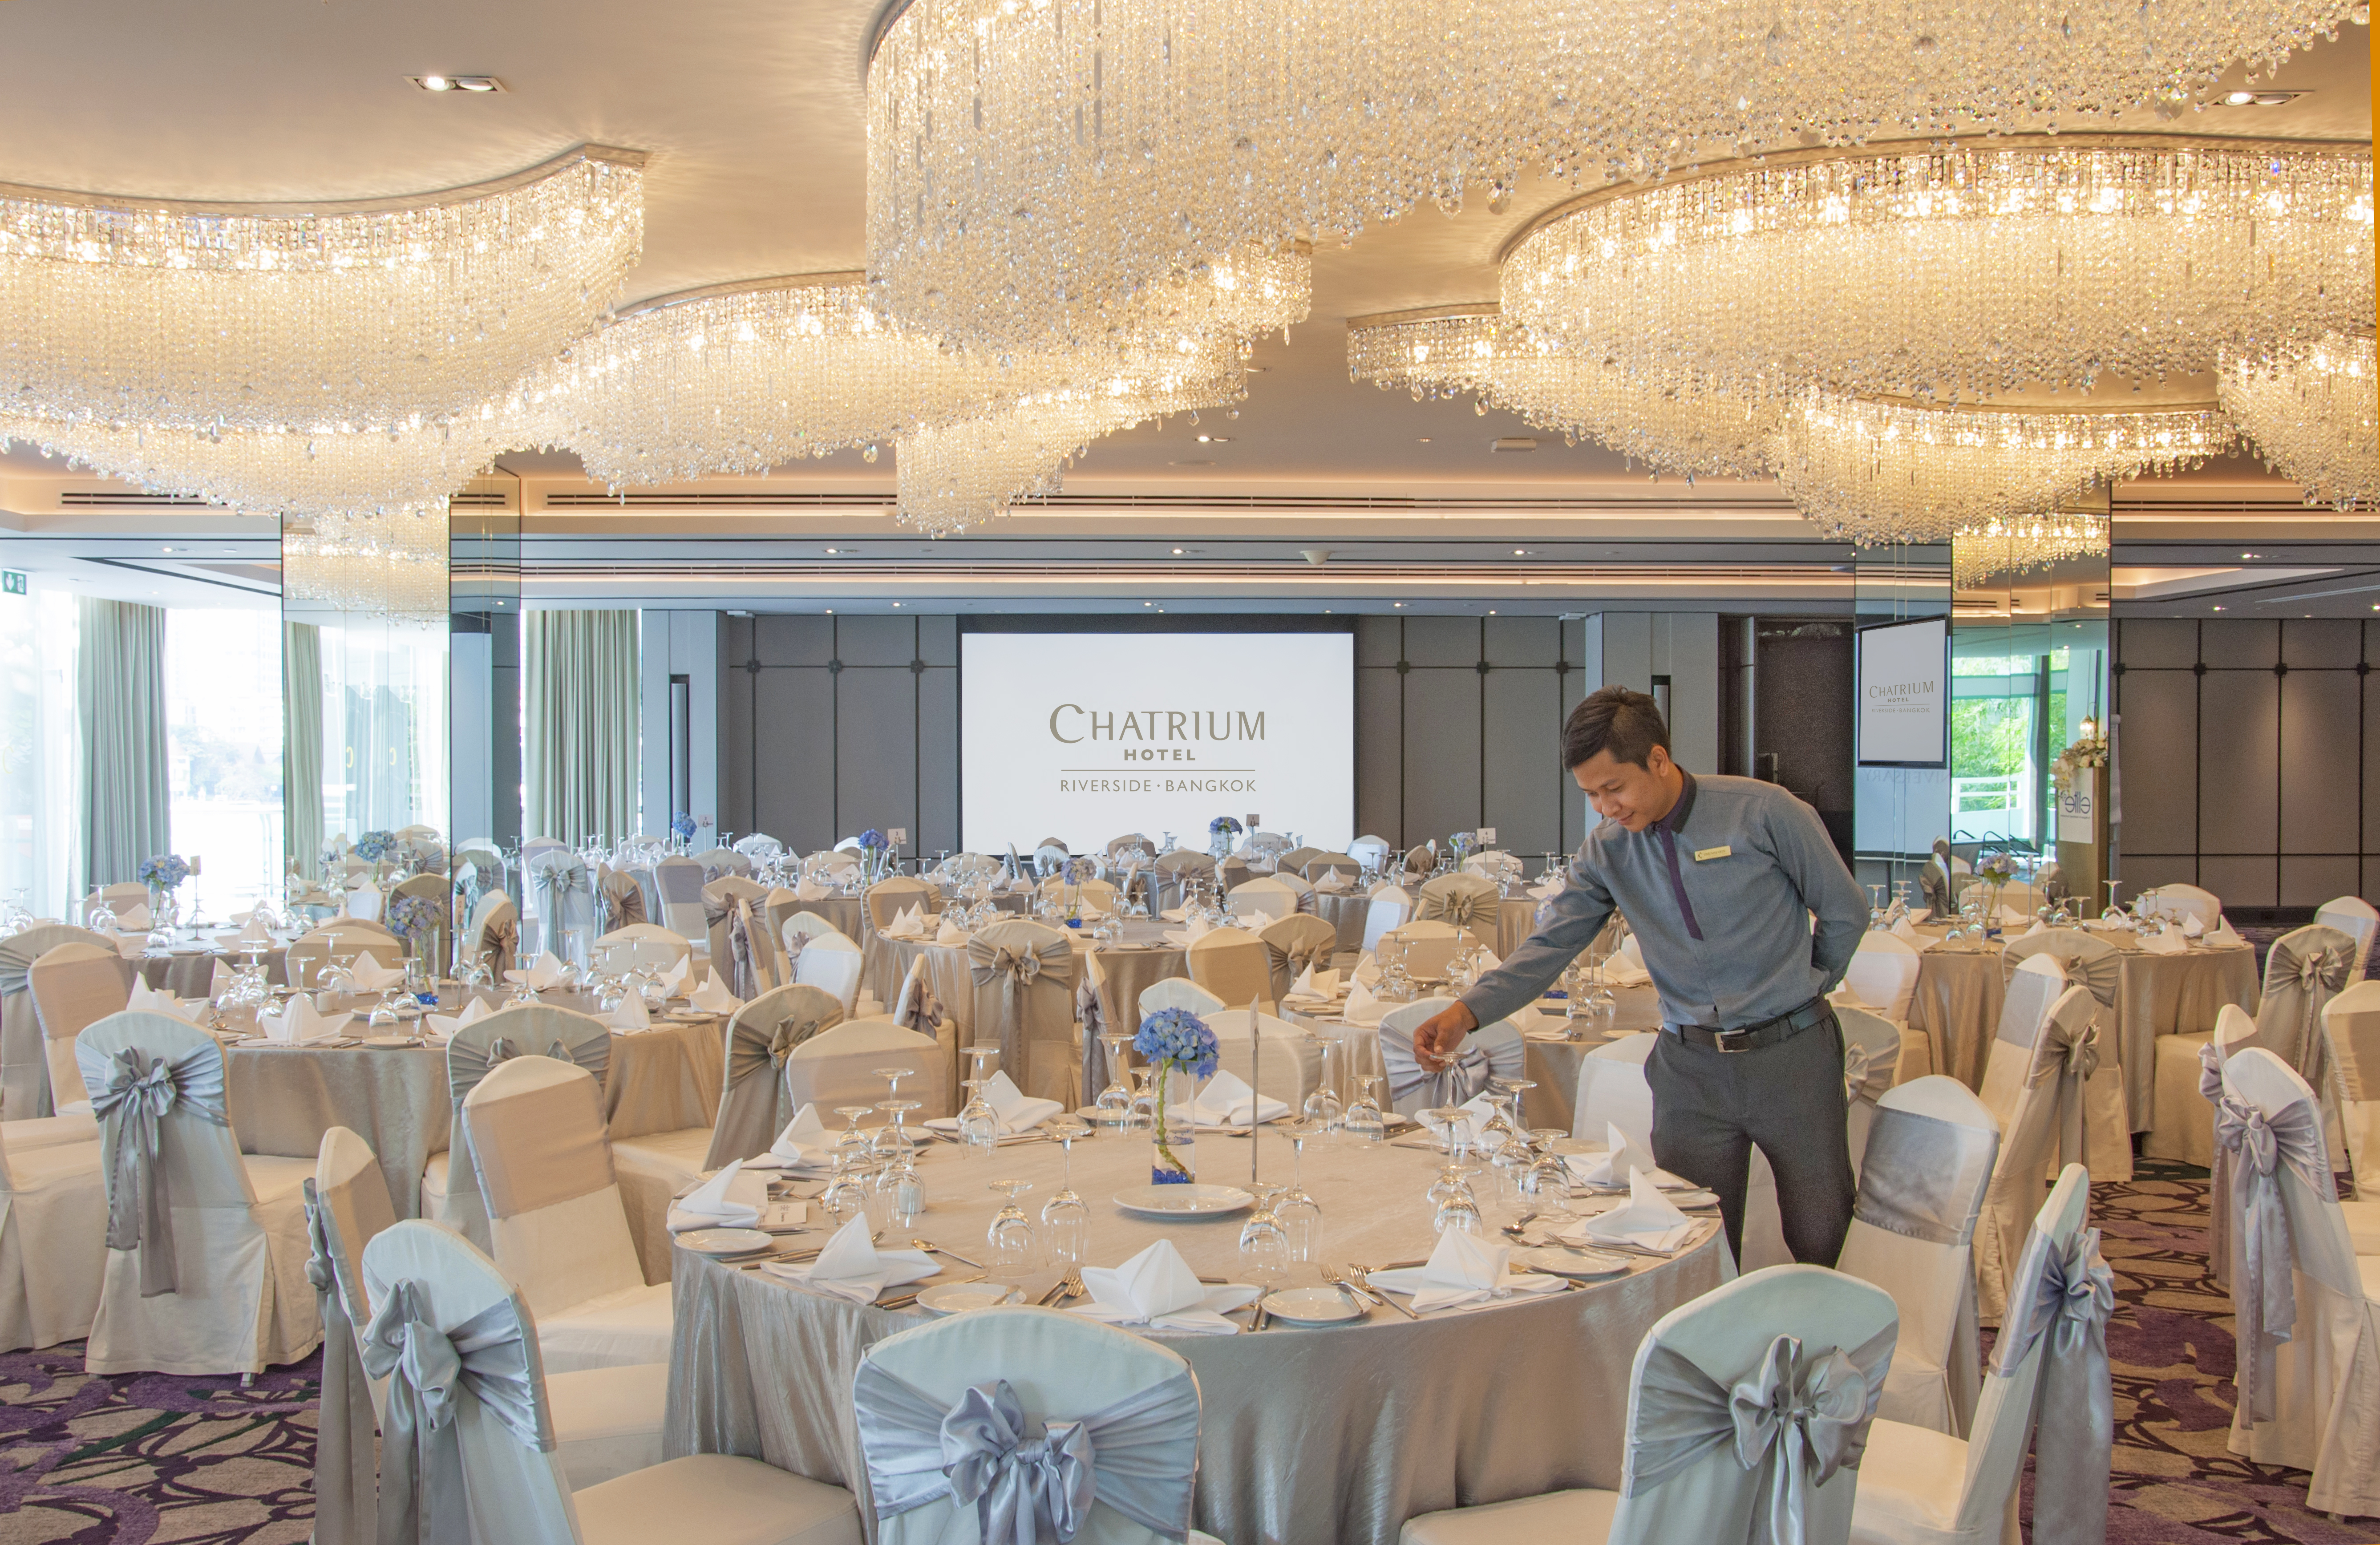 The Next Level of Events Comes Chatrium Hotel Riverside Bangkok